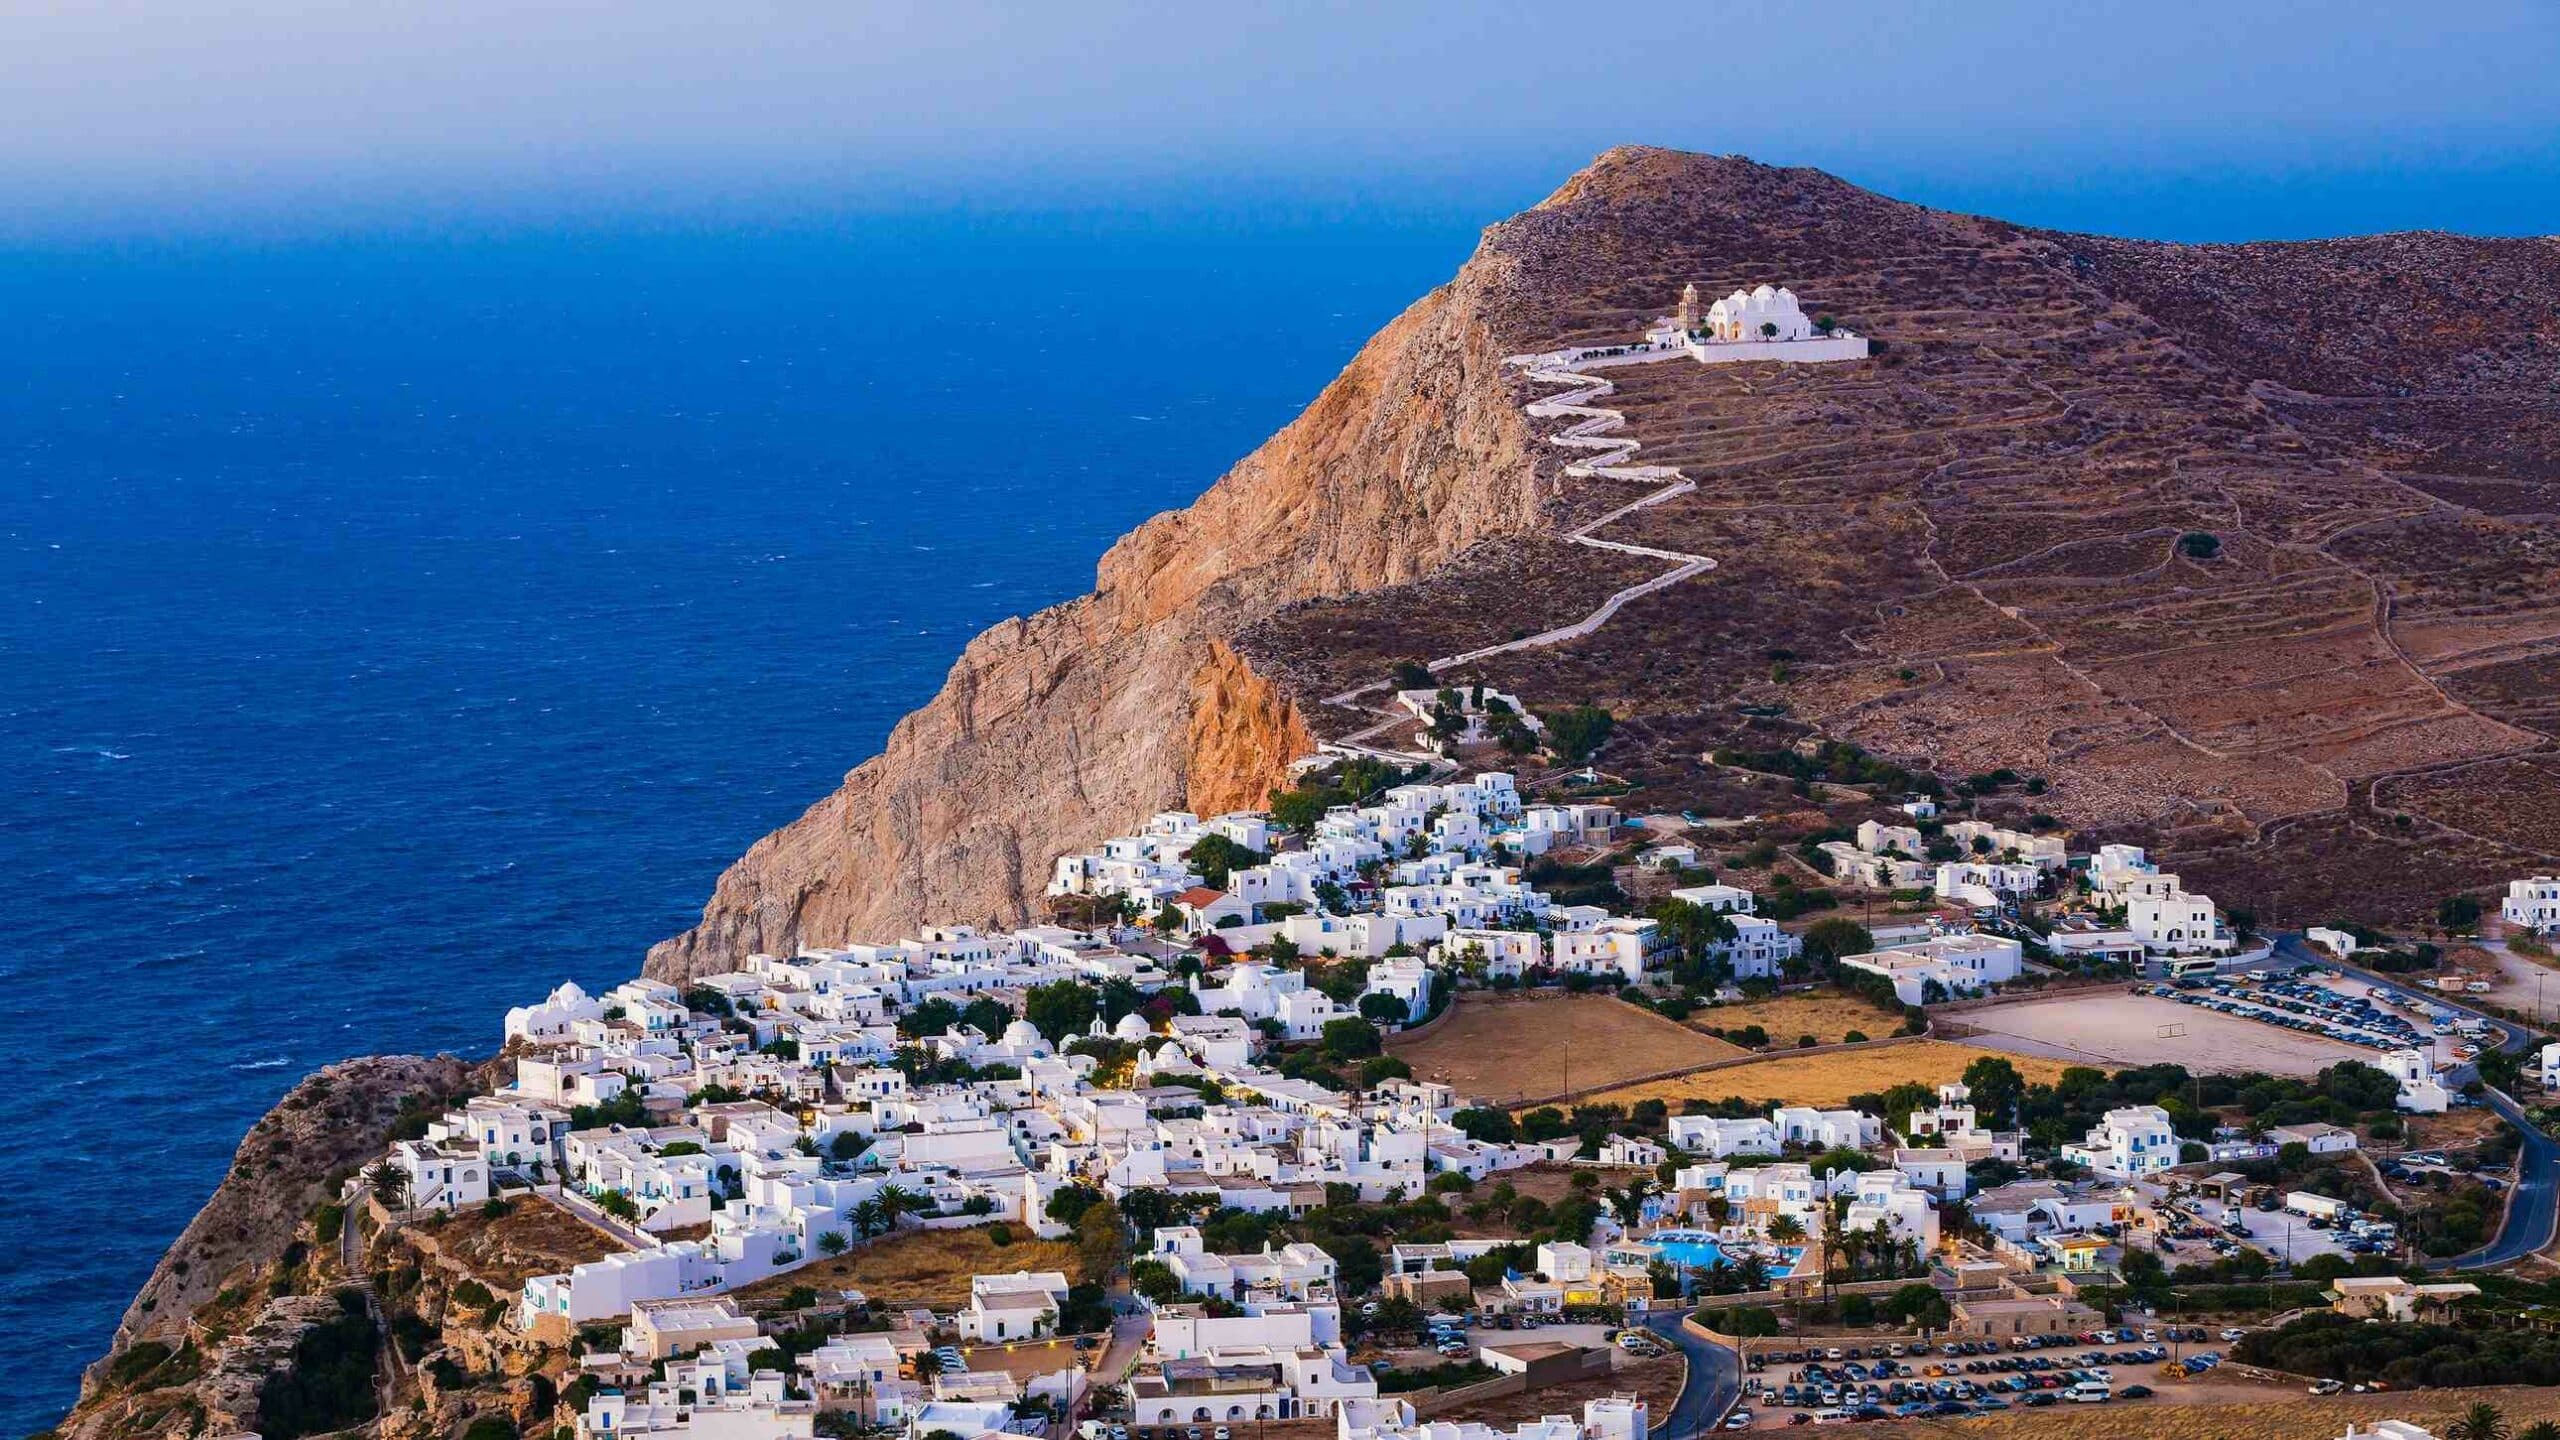 Resim galerisi 4: En güzel kumsallara sahip Yunan Adası hangisidir?